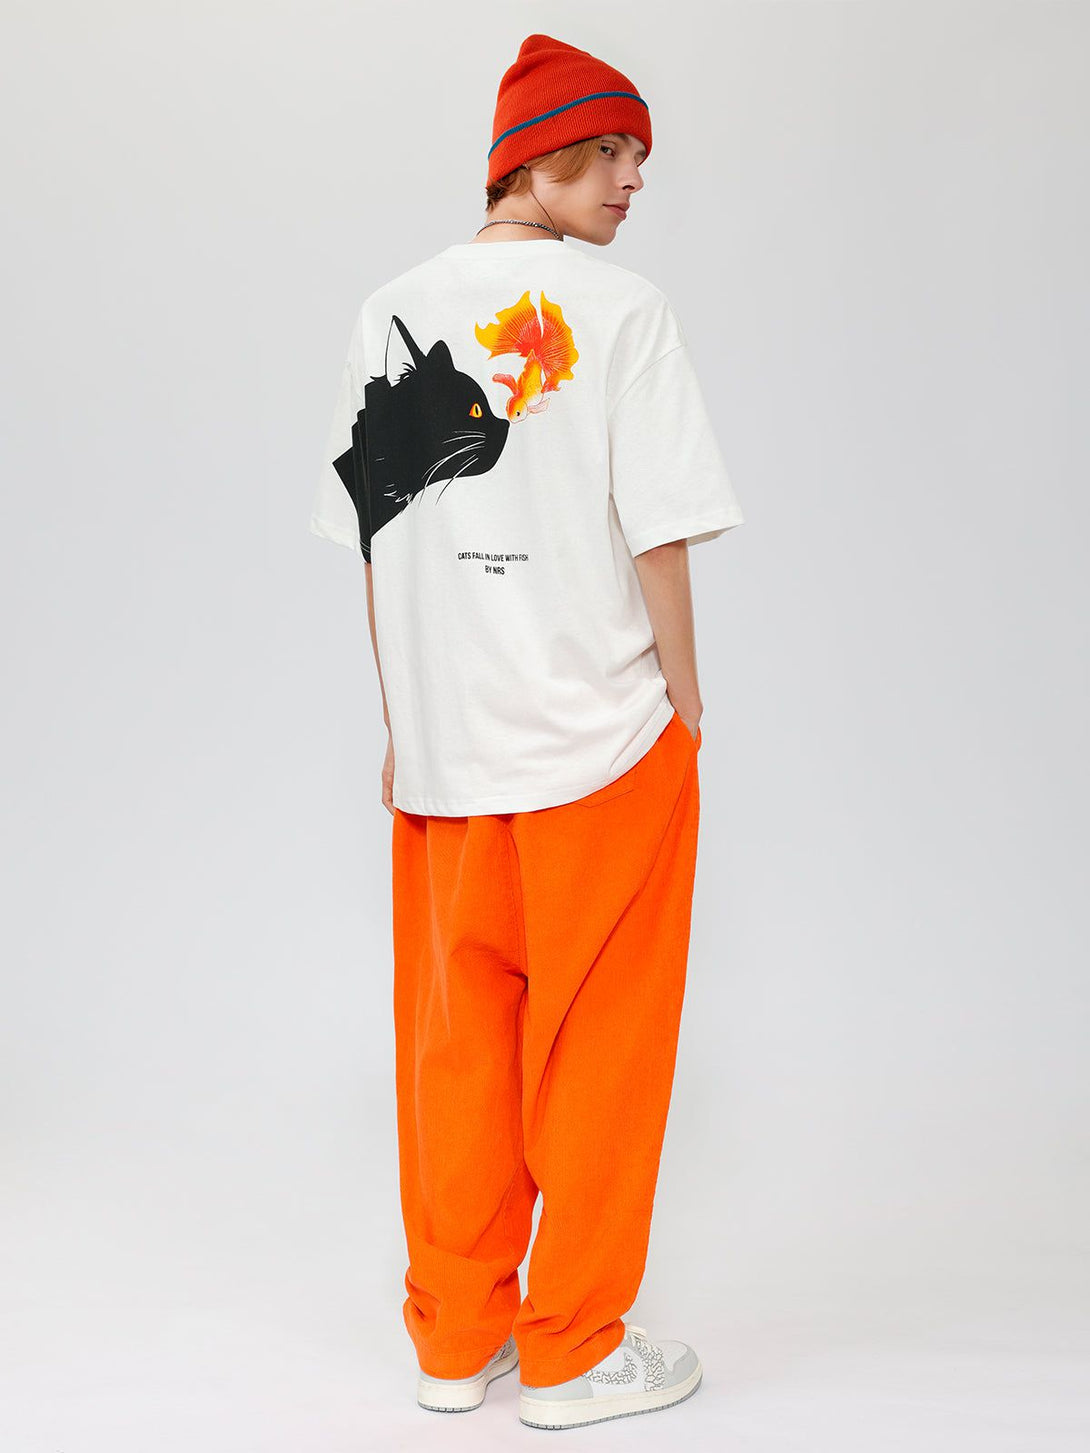 Majesda® - Alphabet Cat and Fish Graphic Tee- Outfit Ideas - Streetwear Fashion - majesda.com